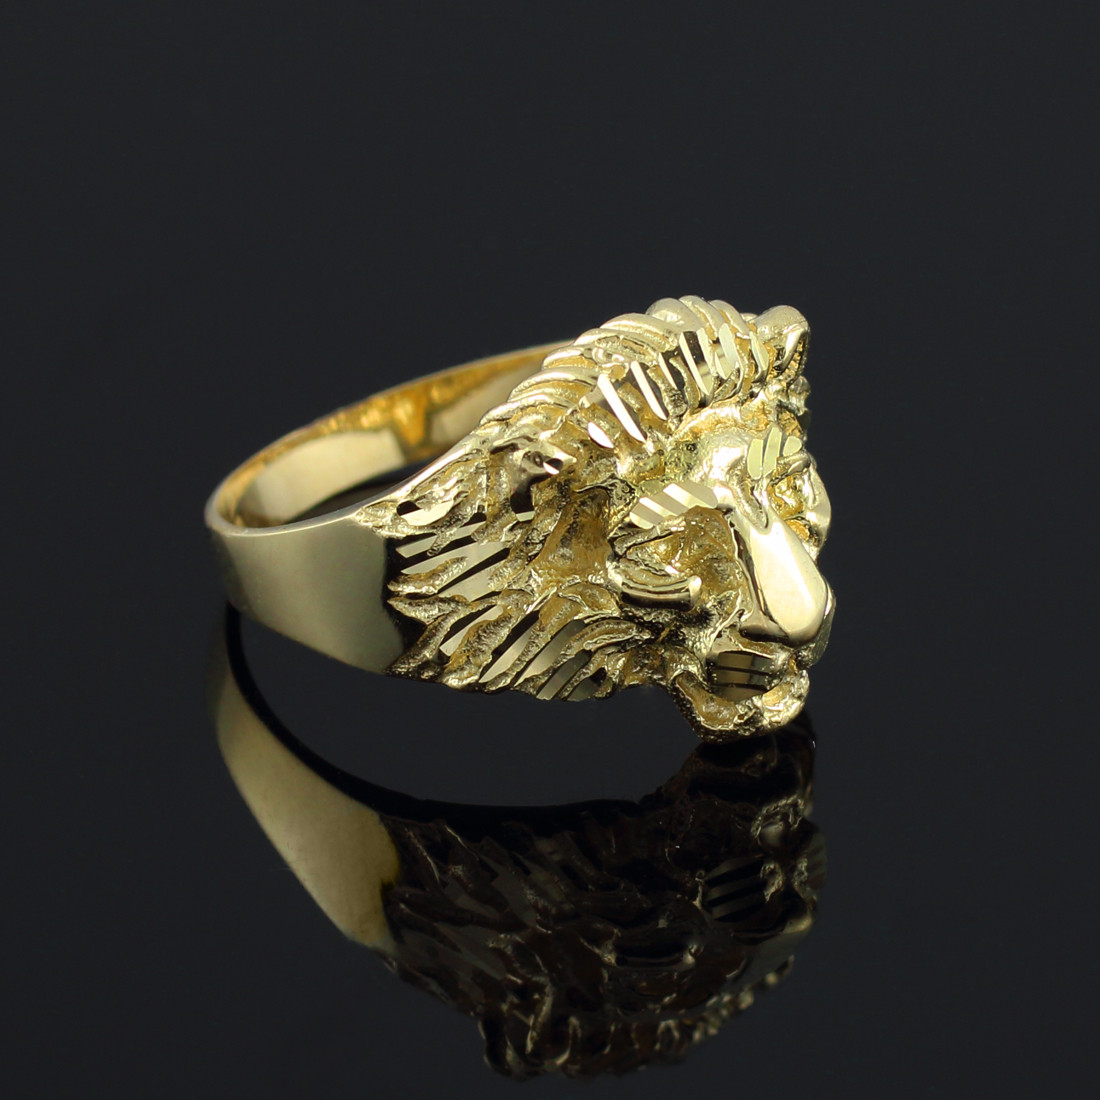 1 Gram Gold Forming Lion Face Latest Design High-quality Ring For Men -  Style A979, सोने की अंगूठी - Soni Fashion, Rajkot | ID: 27602669633